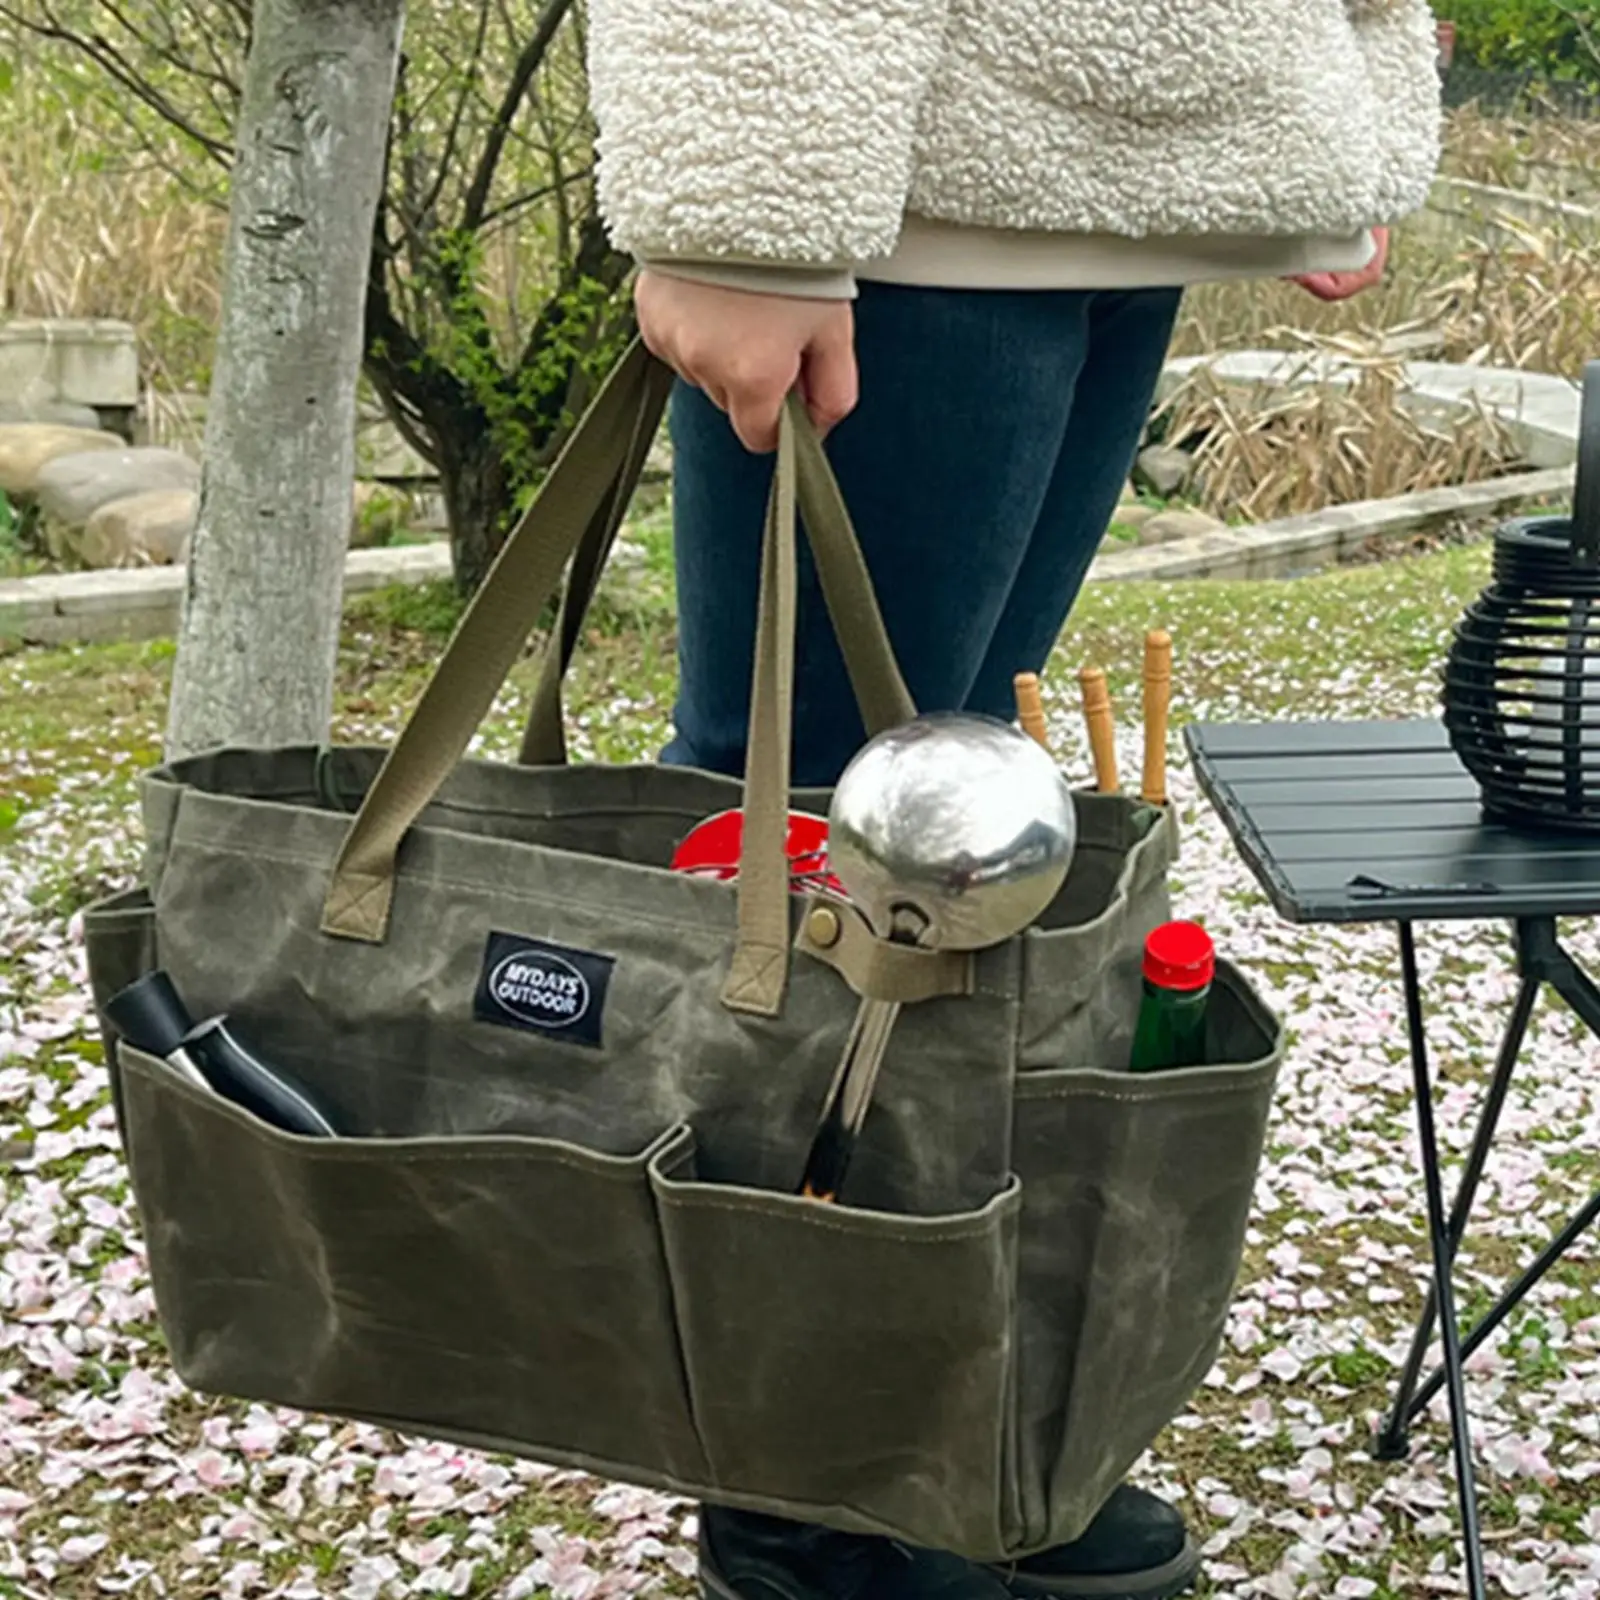 Camping Storage Bag Waterproof Basket Wear Resistant with Carry Handle Travel